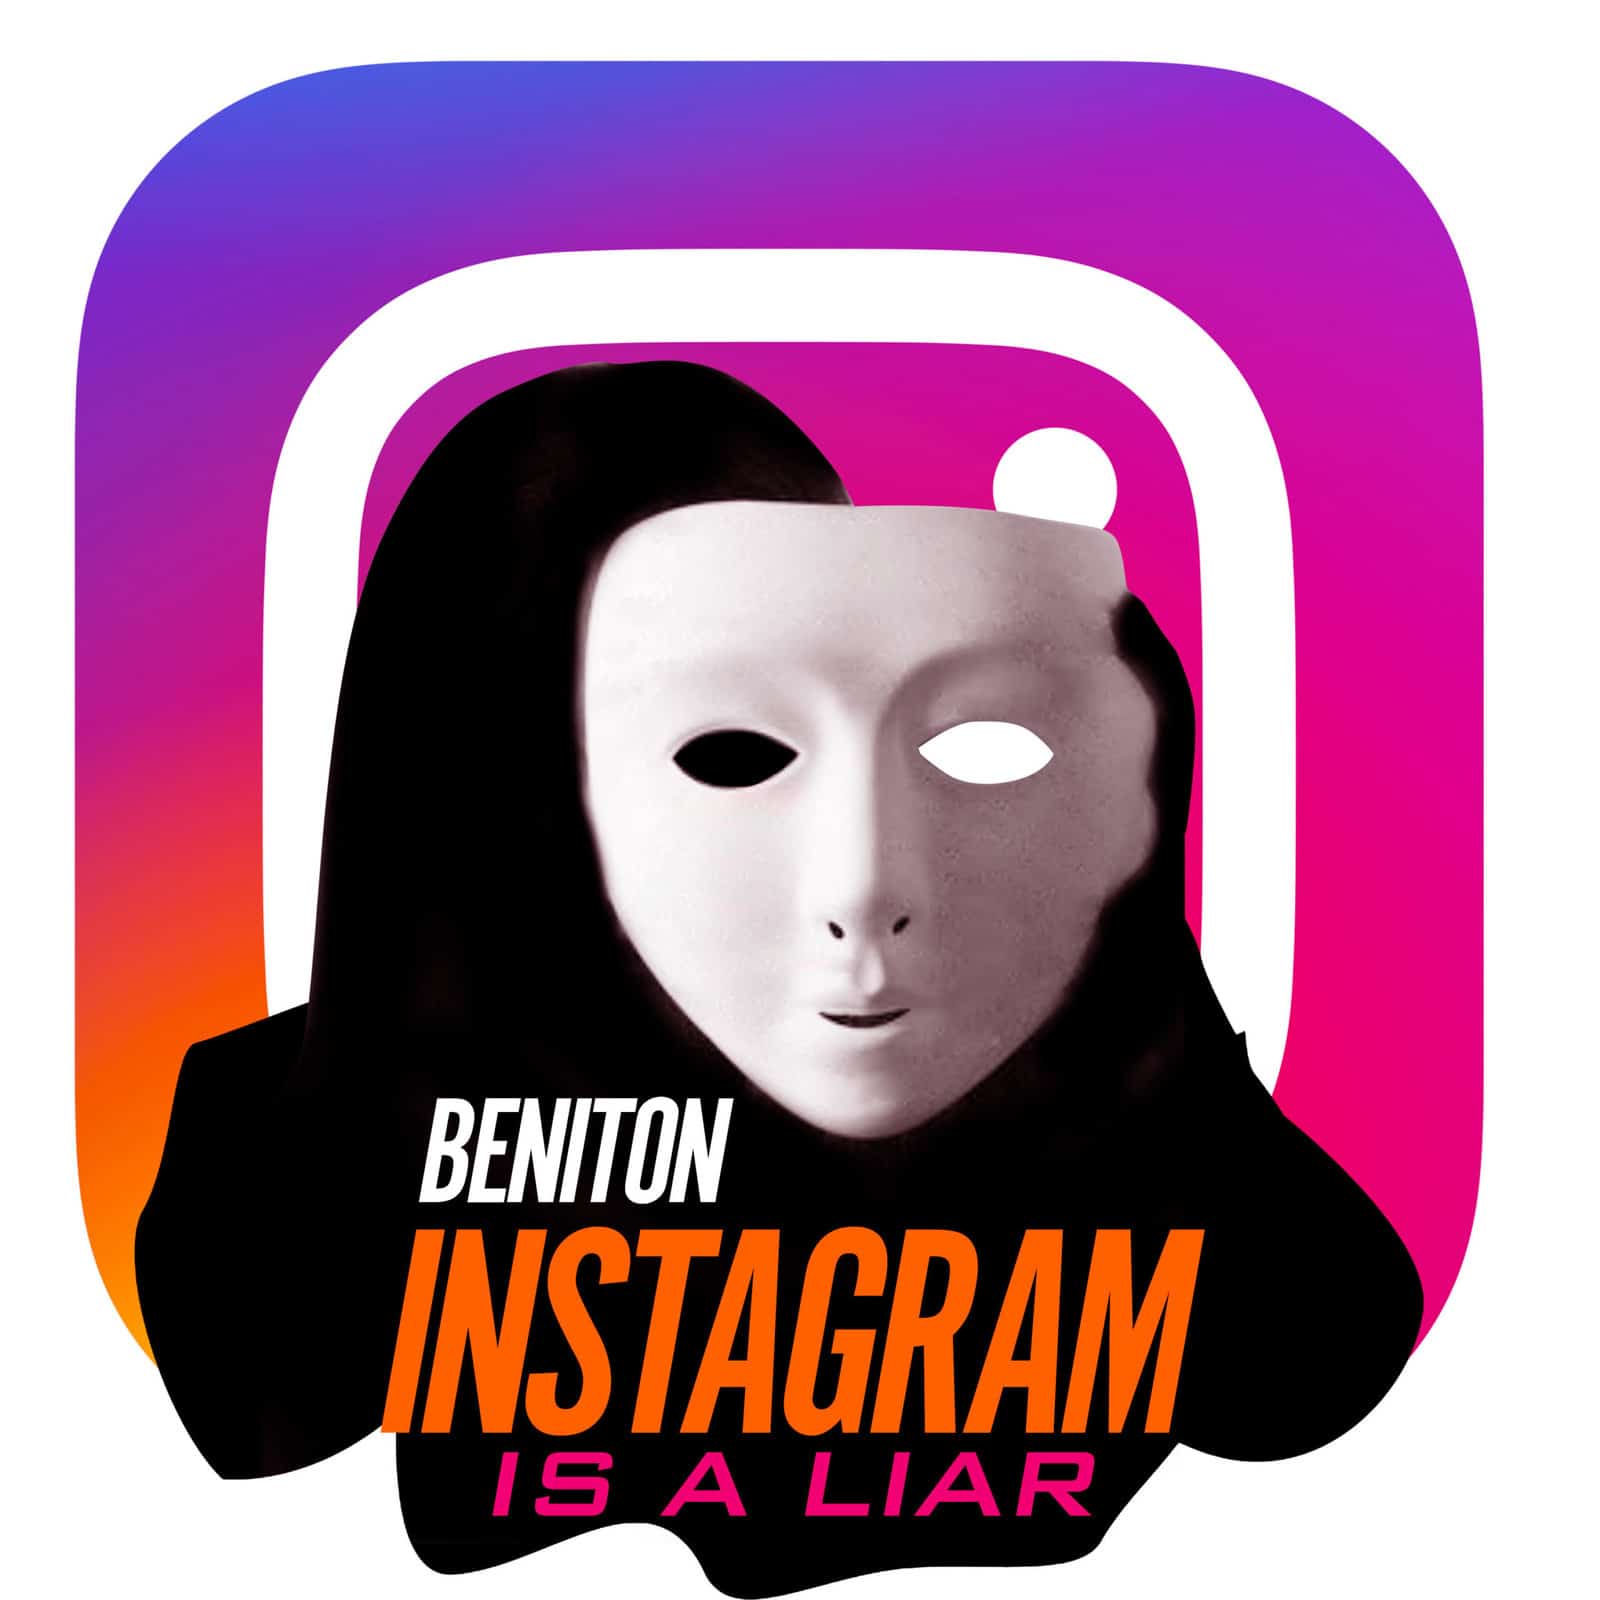 Beniton - Instagram is a liar